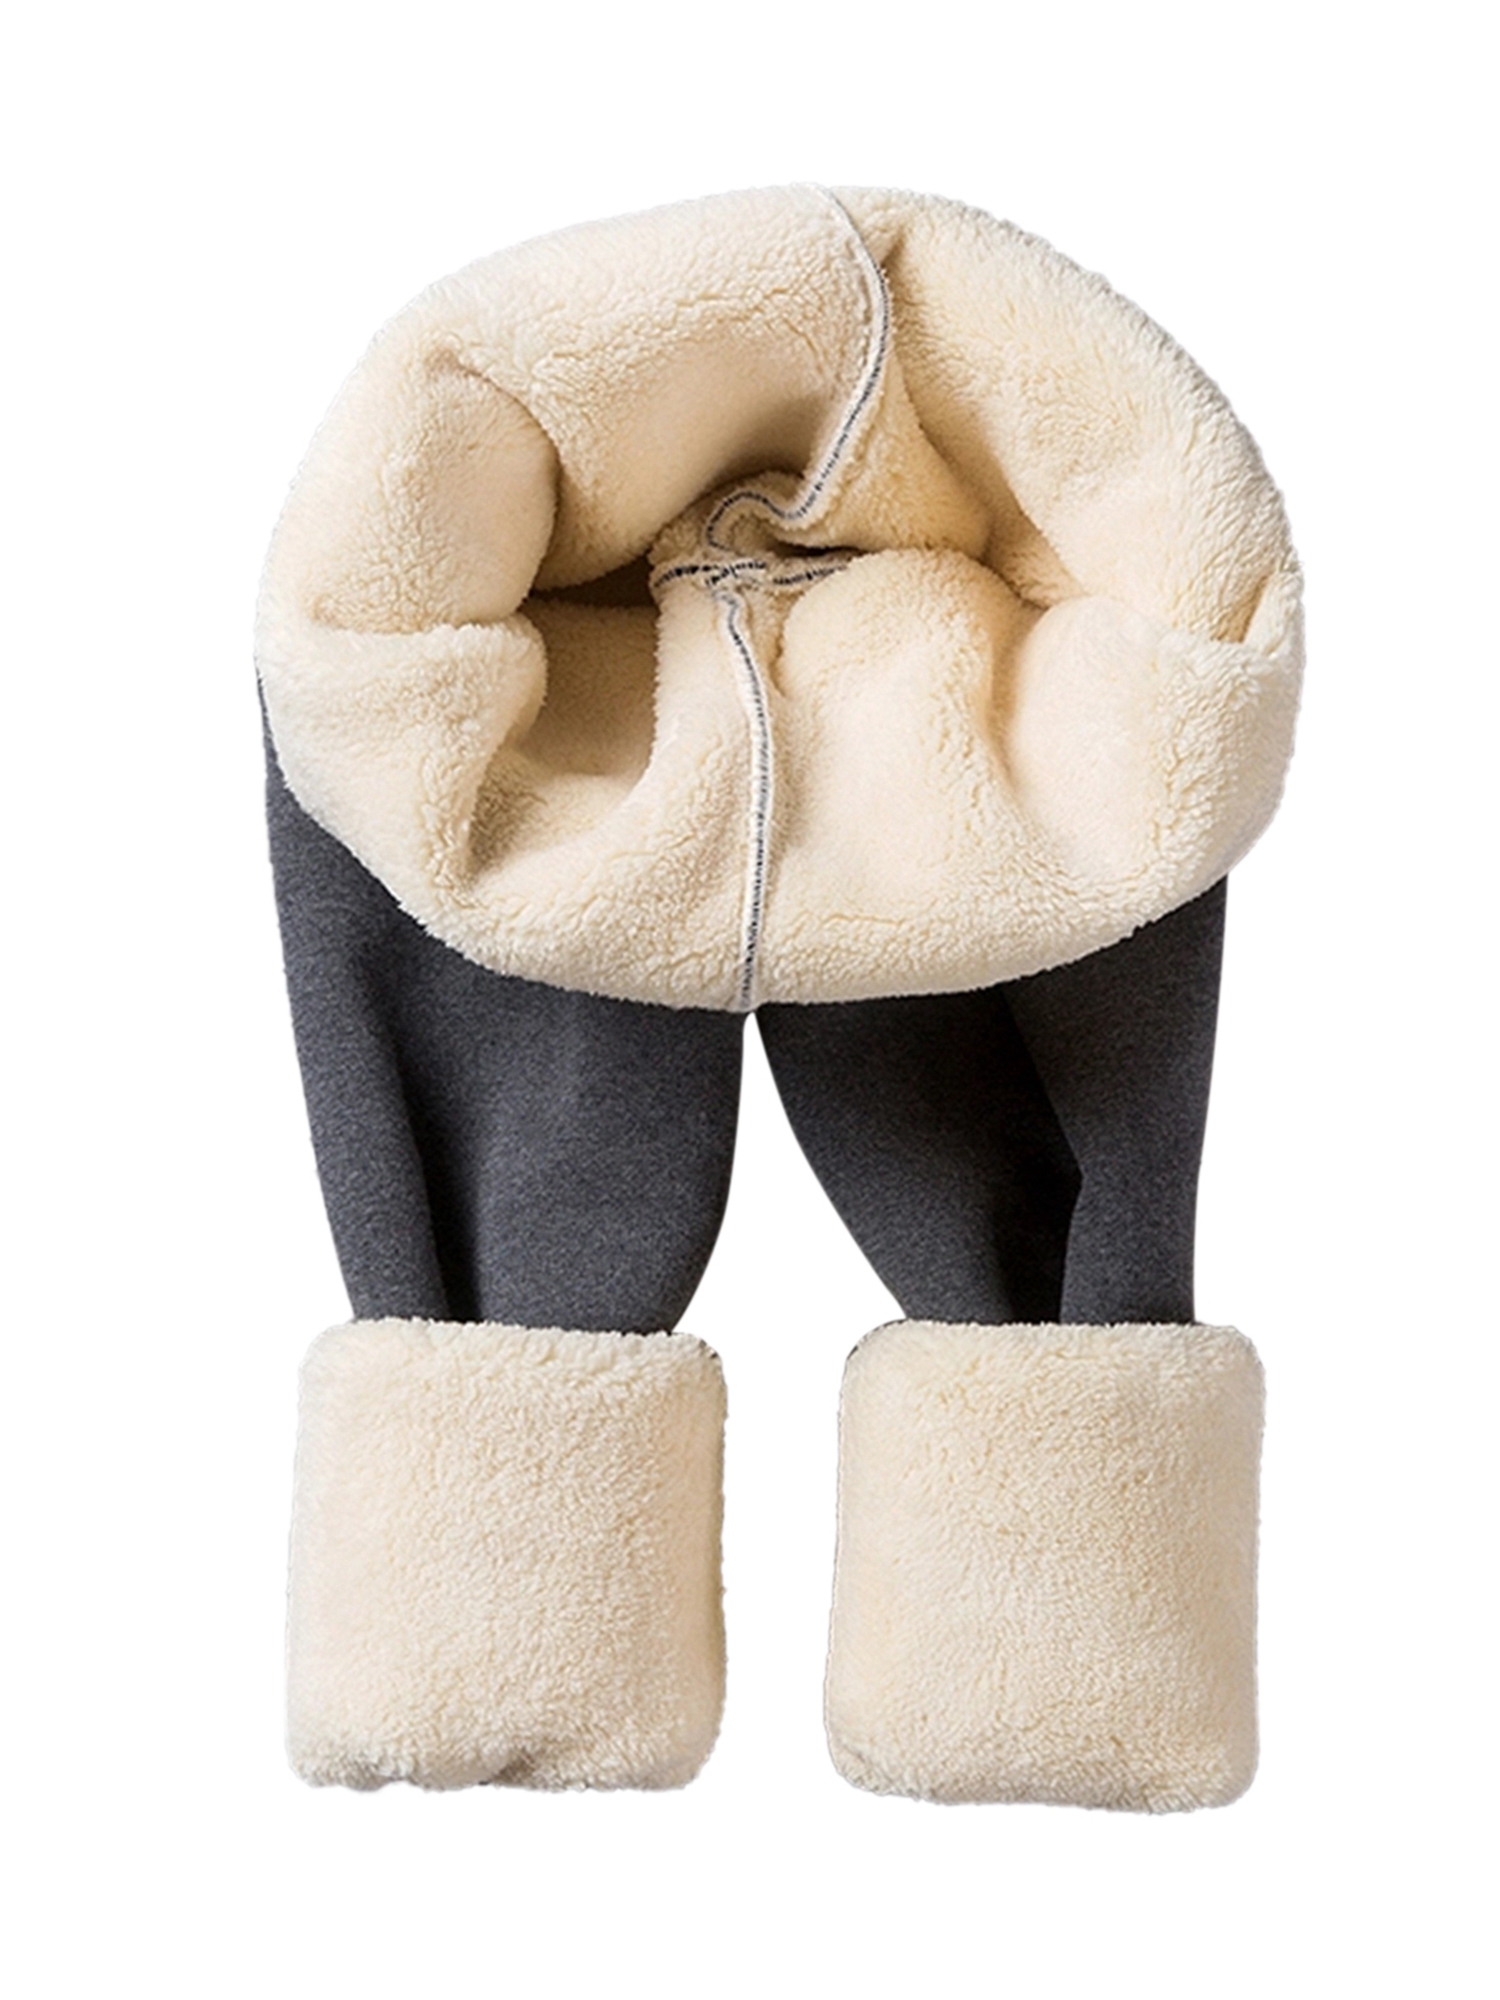 AMILIEe Women Thick Fleece Lined Leggings High Waist Thermal Pants - Walmart.com